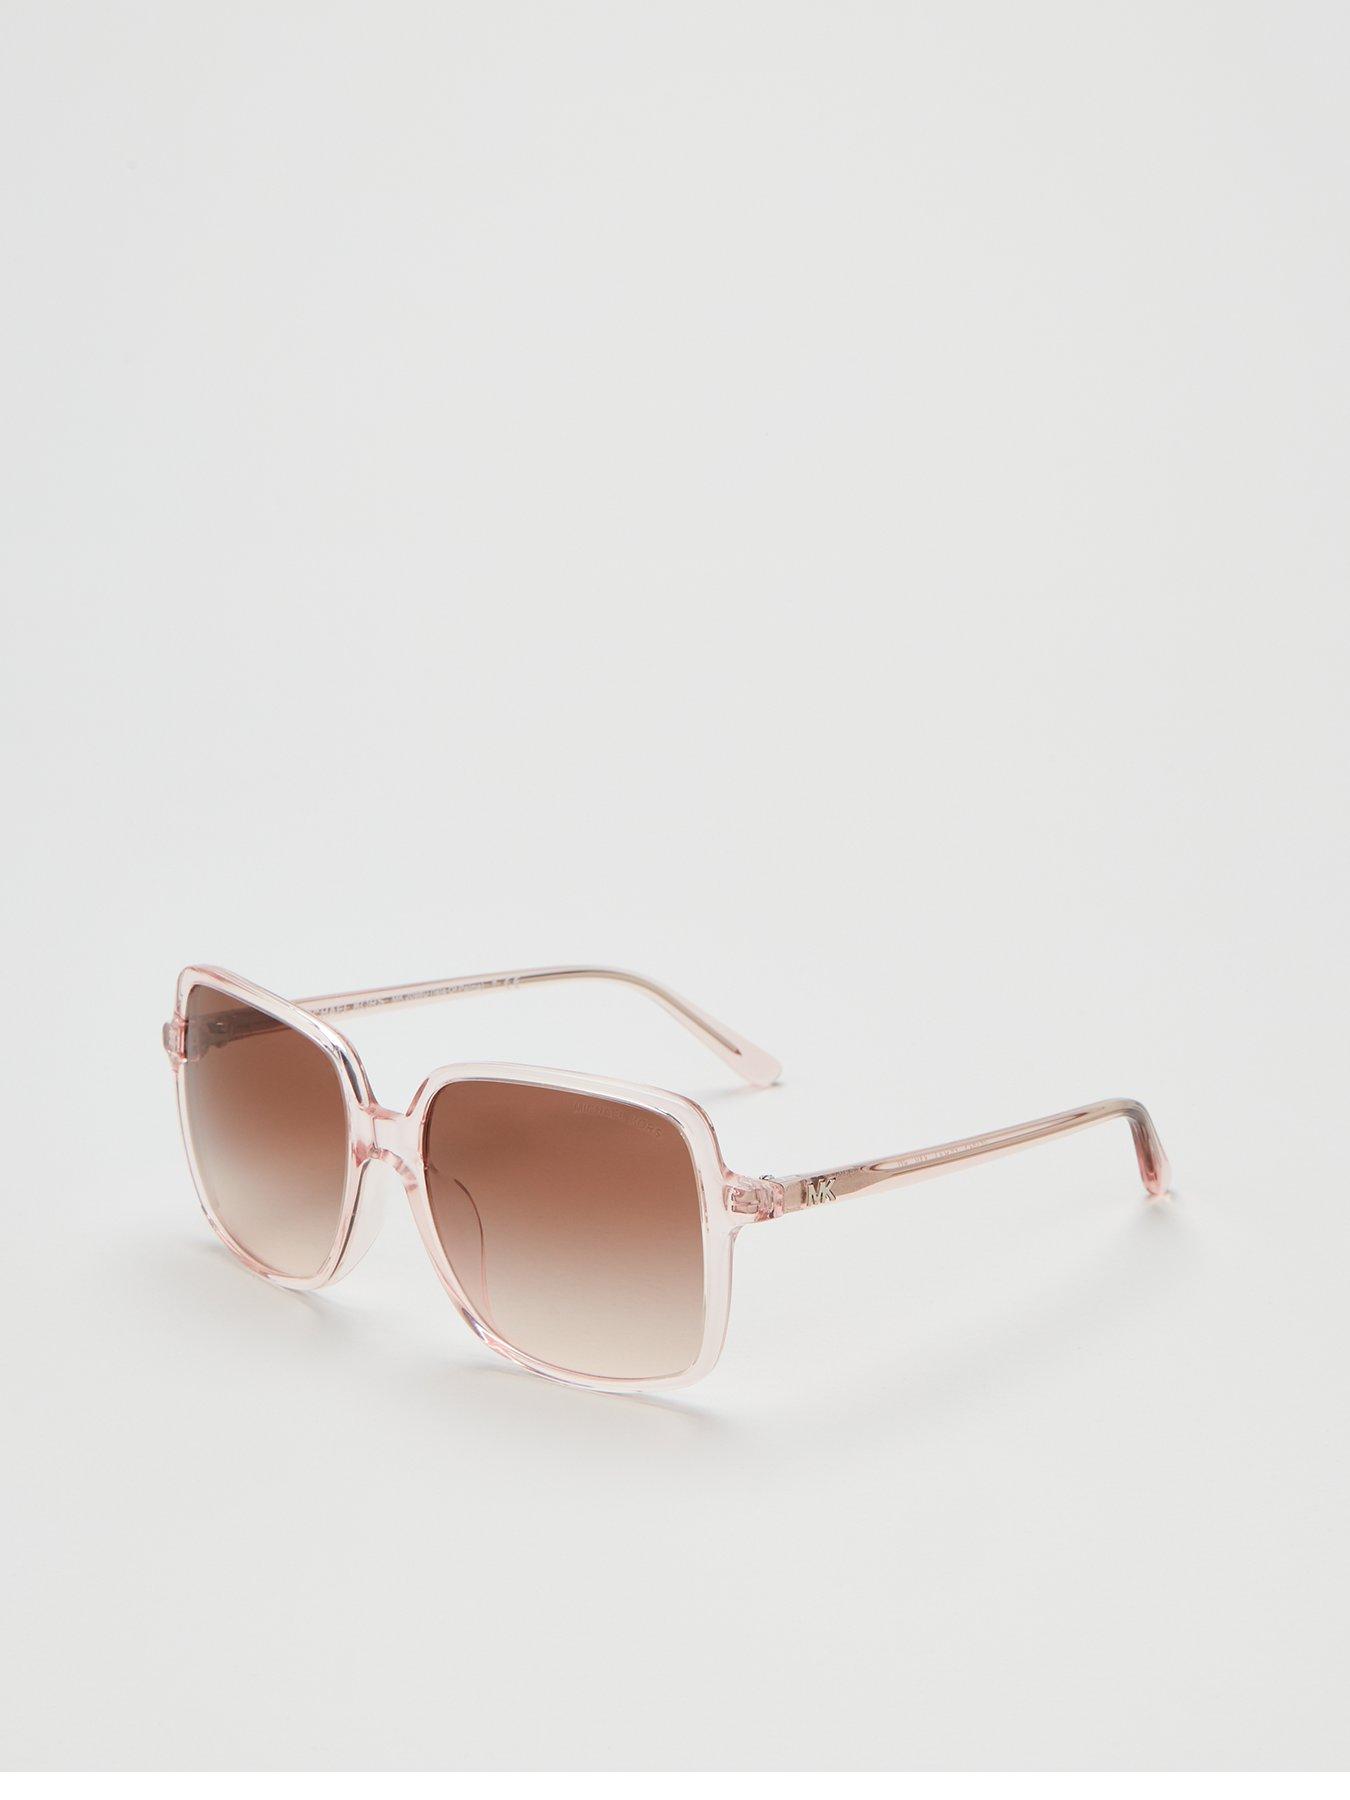 michael kors square sunglasses